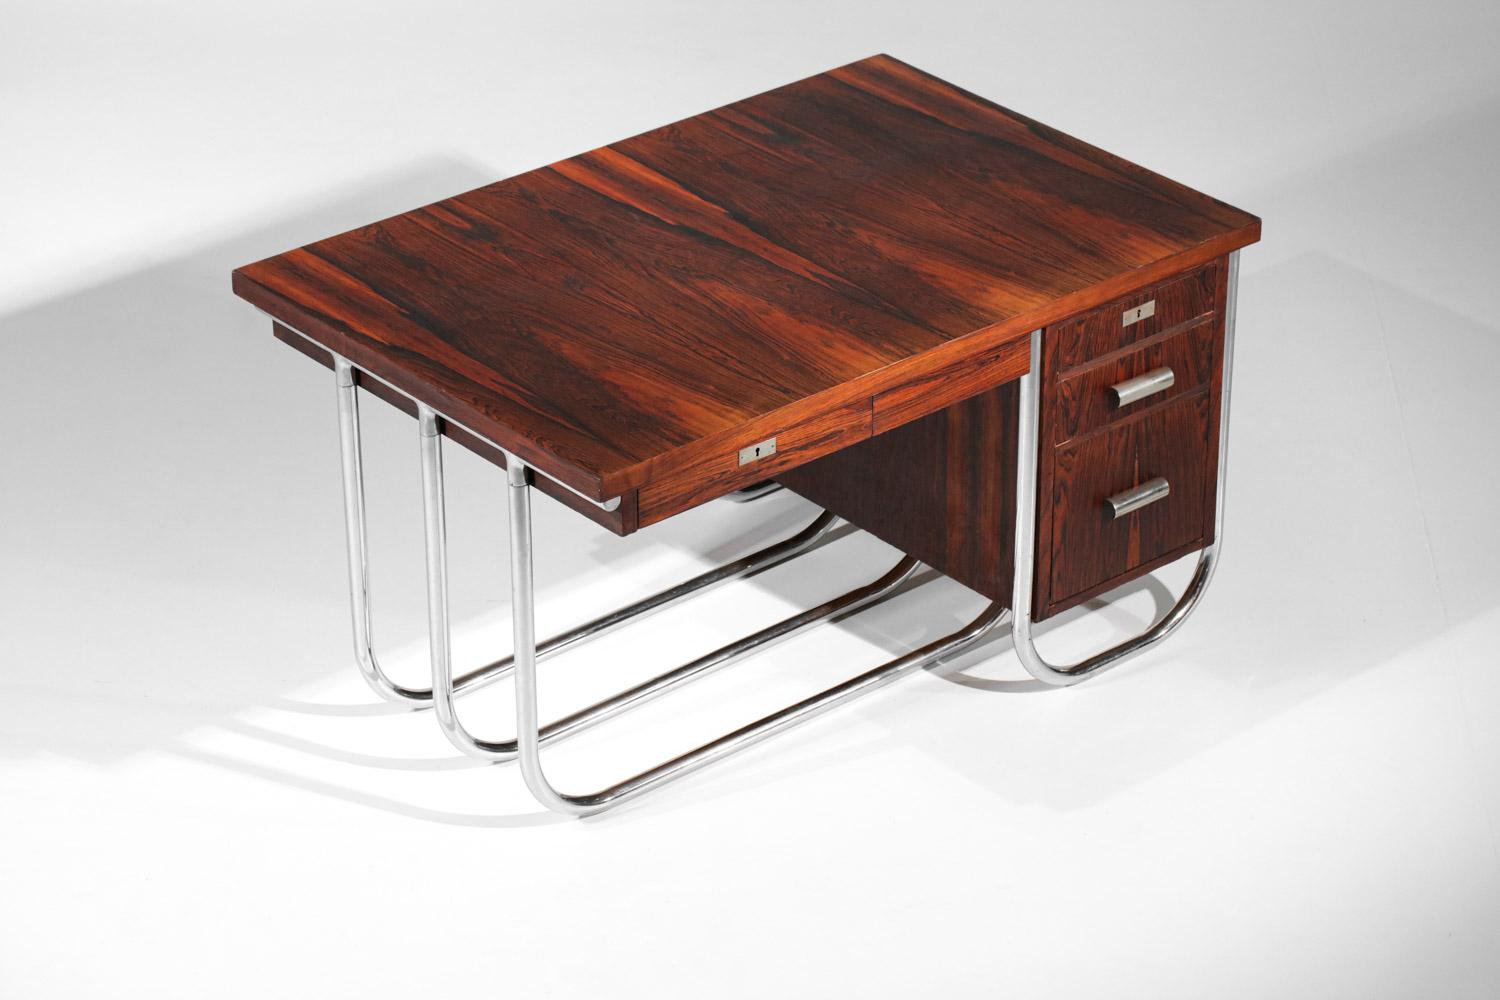 Modernist Desk in Solid Wood 40s / 50s Bauhaus Style Vintage For Sale 1